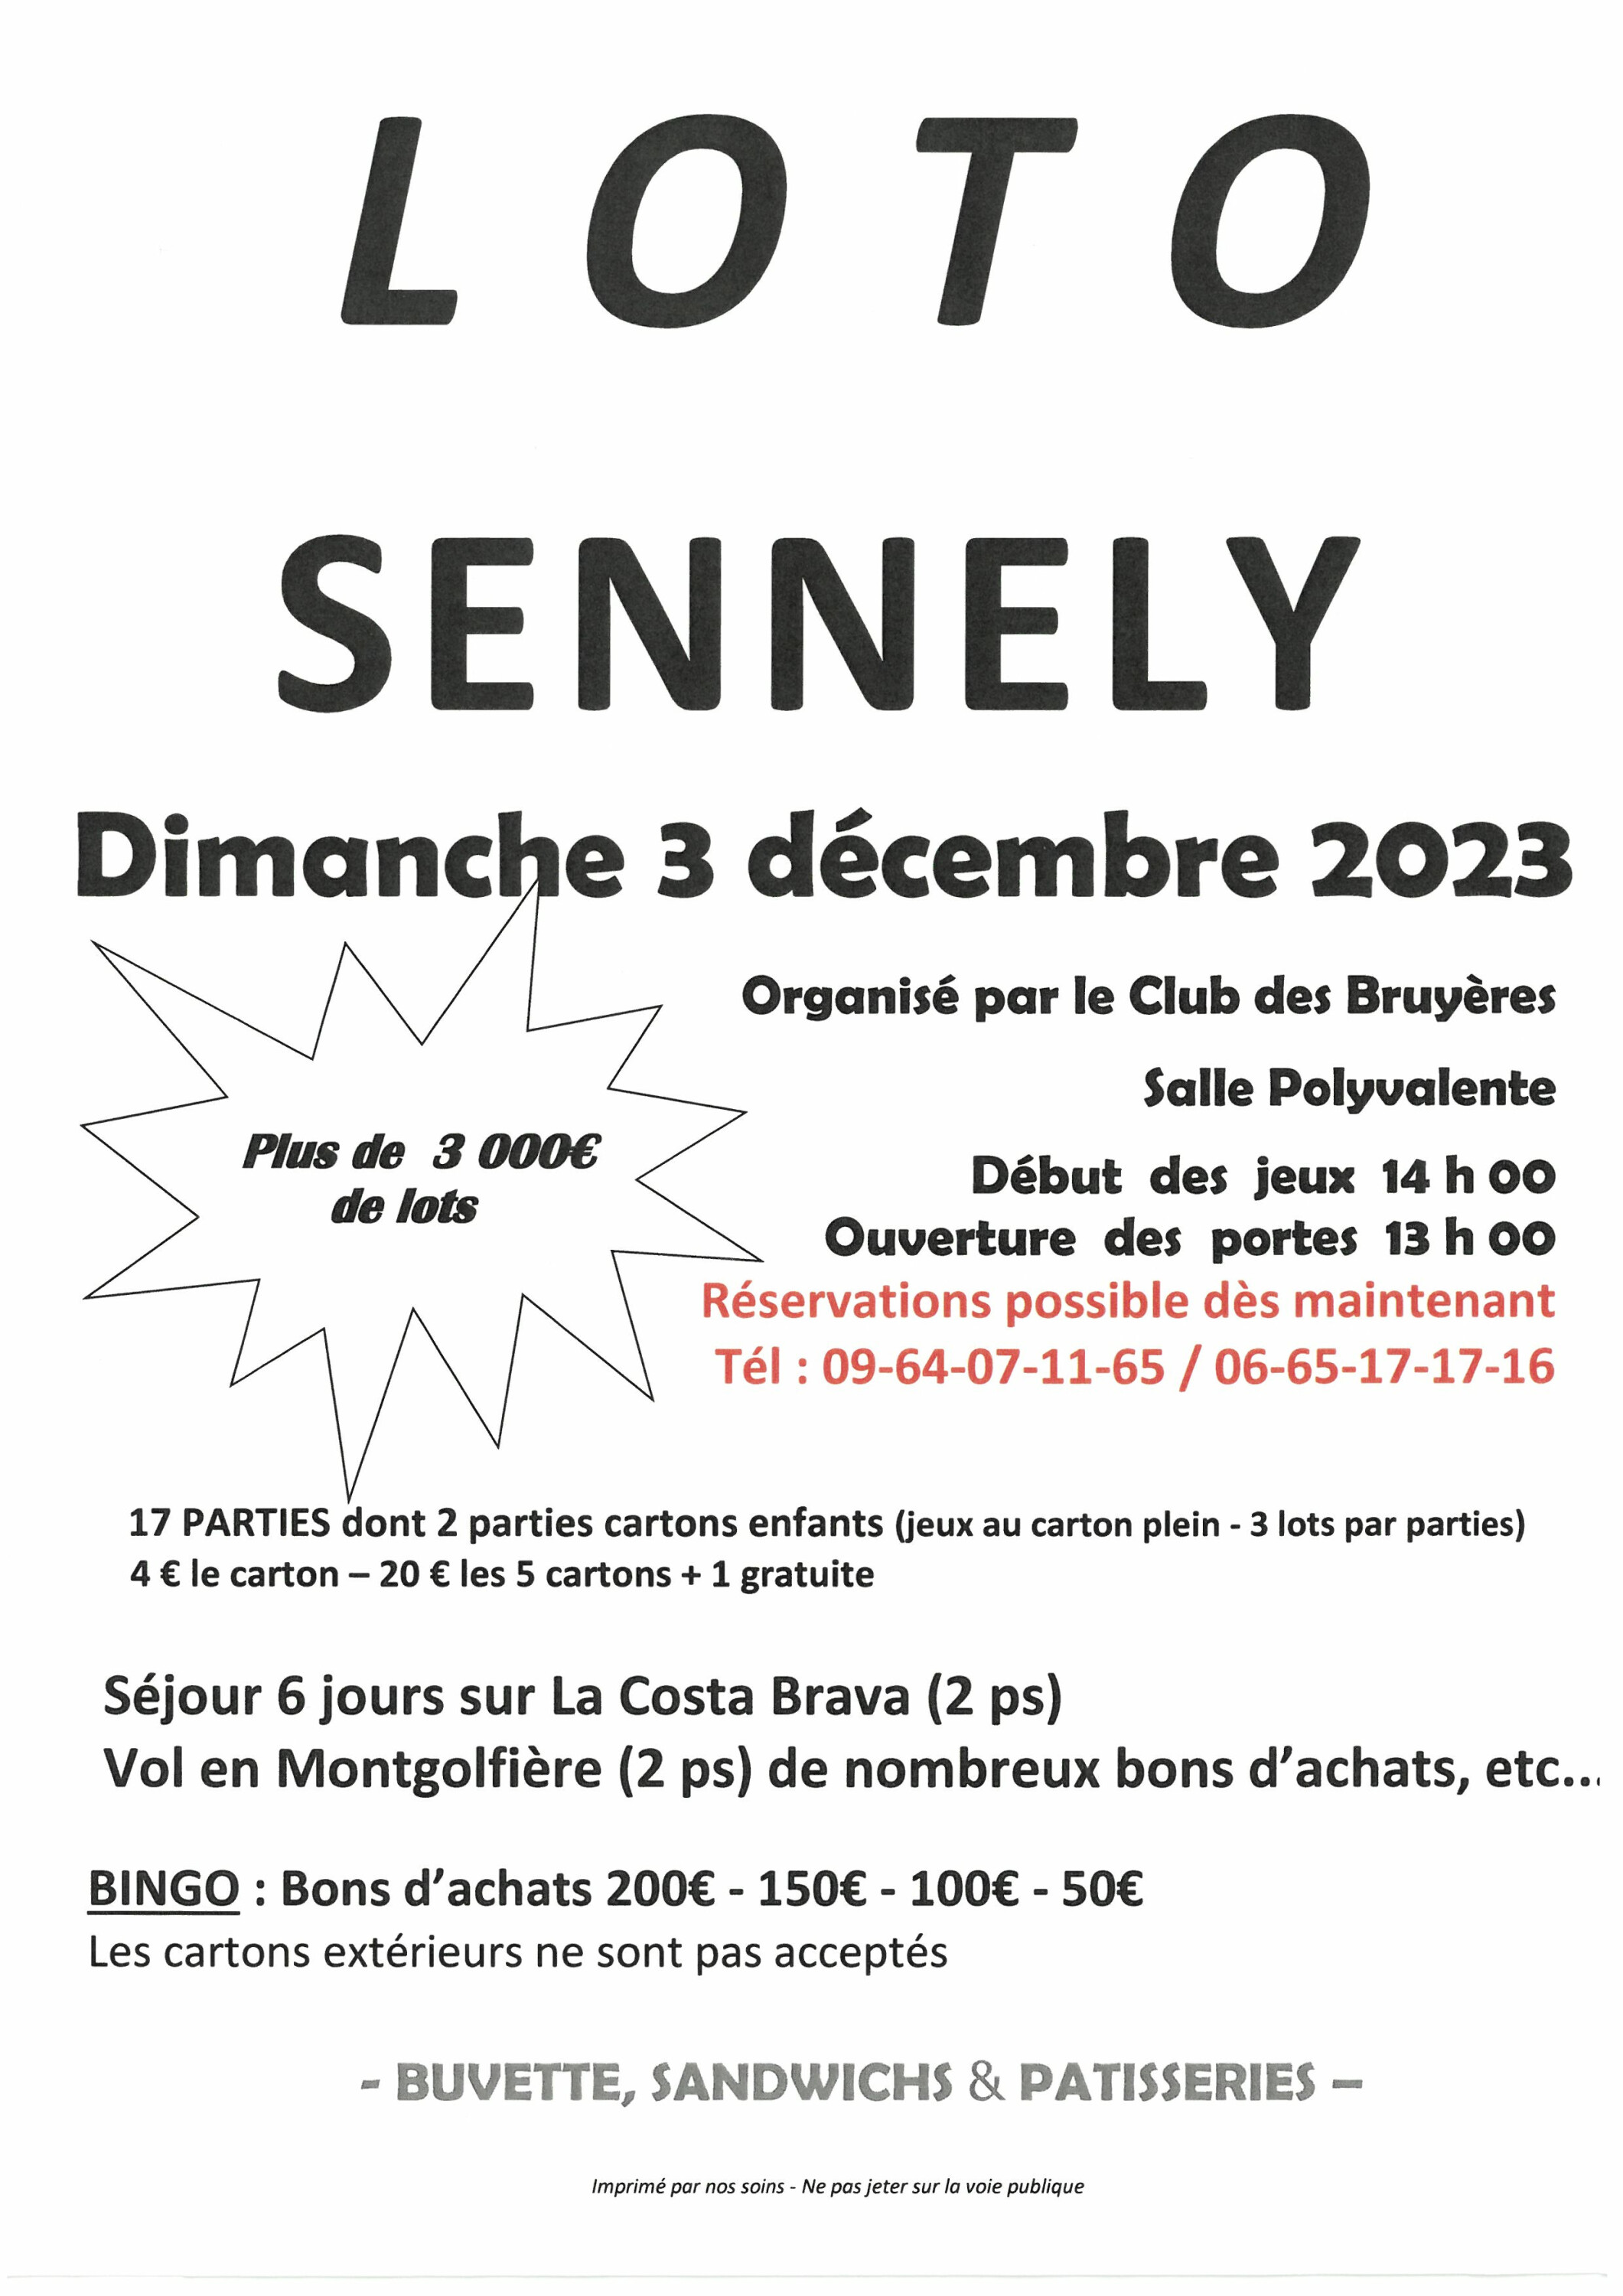 Loto Sennely 03 12 23